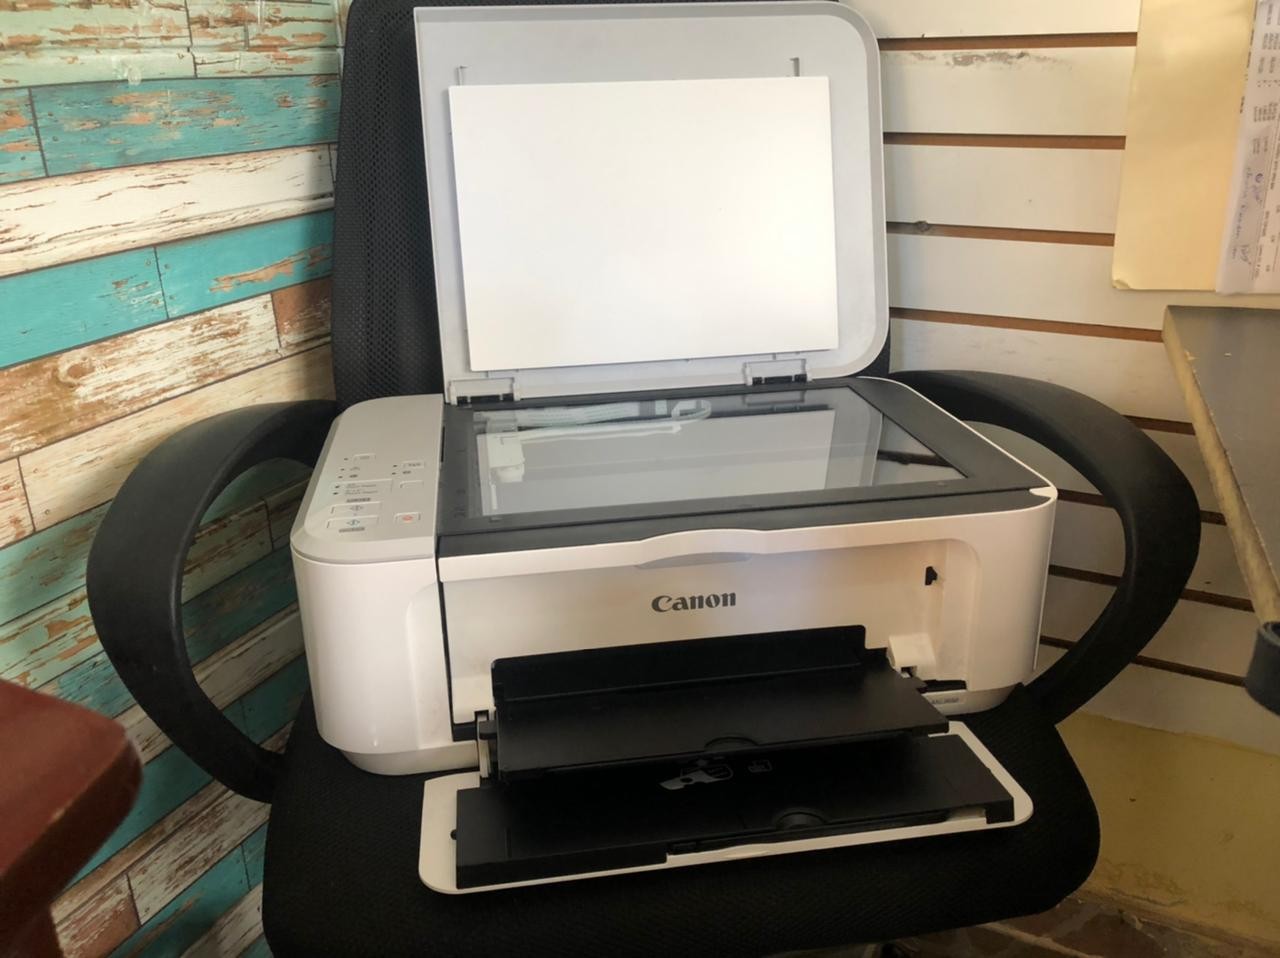 impresoras y scanners - Impresora Multifuncional Canon MG2110 